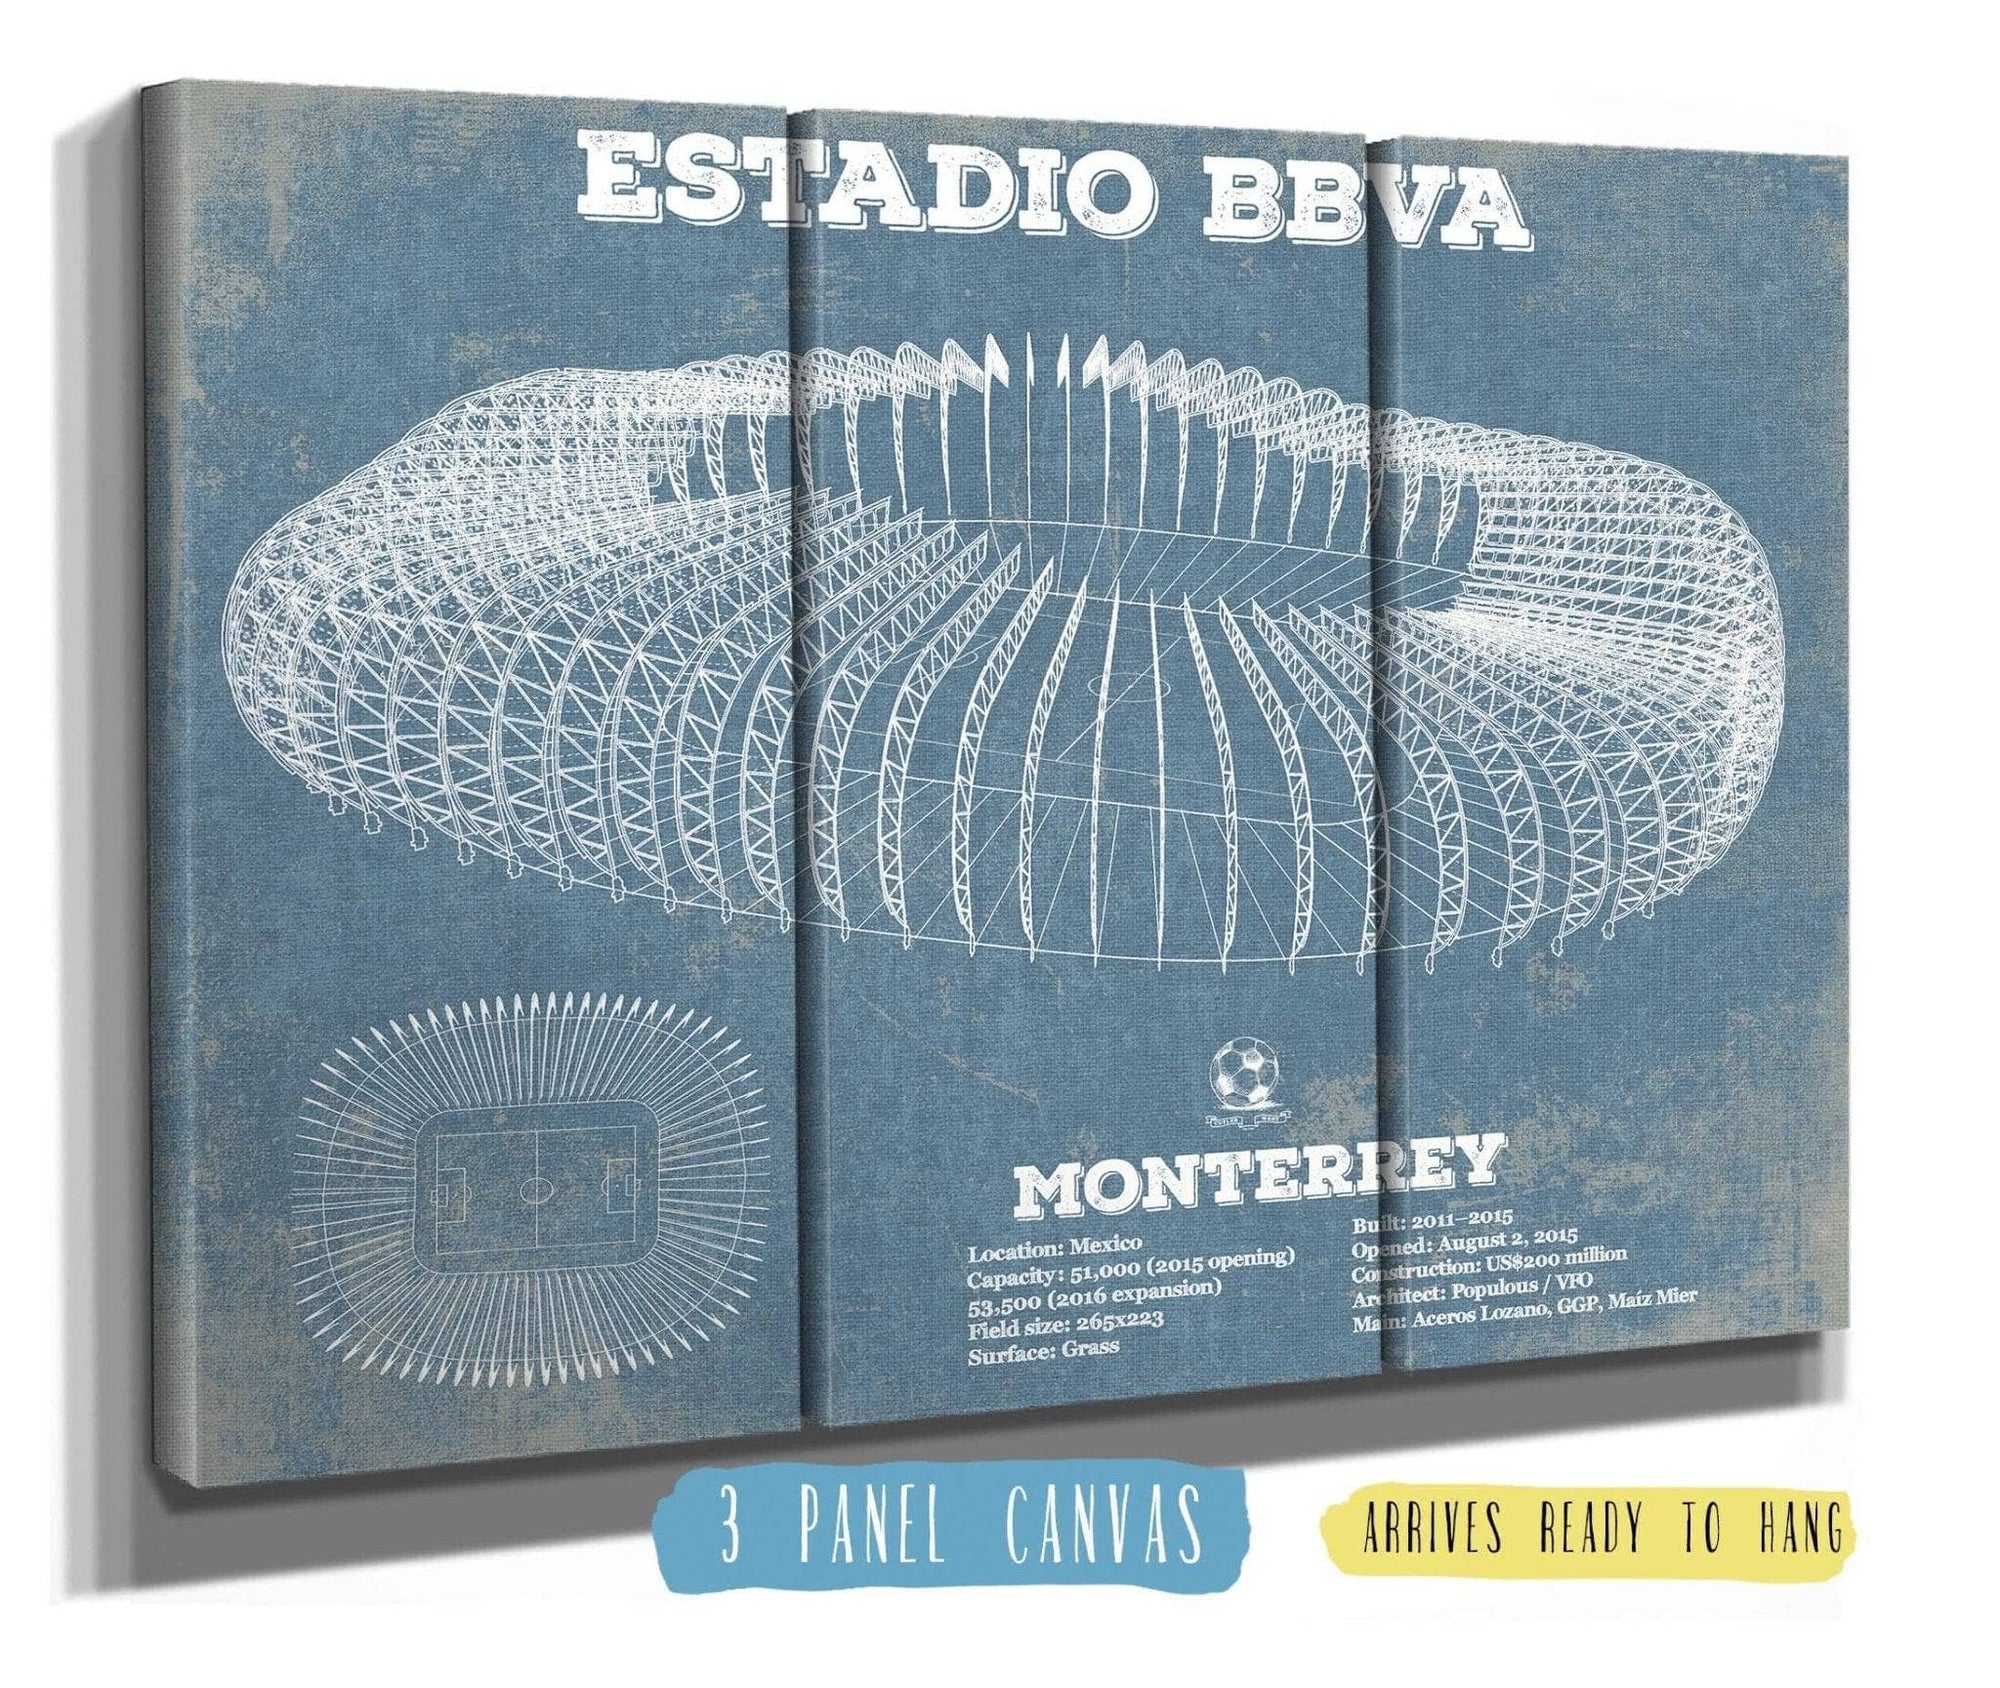 Cutler West Soccer Collection 48" x 32" / 3 Panel Canvas Wrap Monterrey Vintage Estadio BBVA Soccer Print 833110141_57631